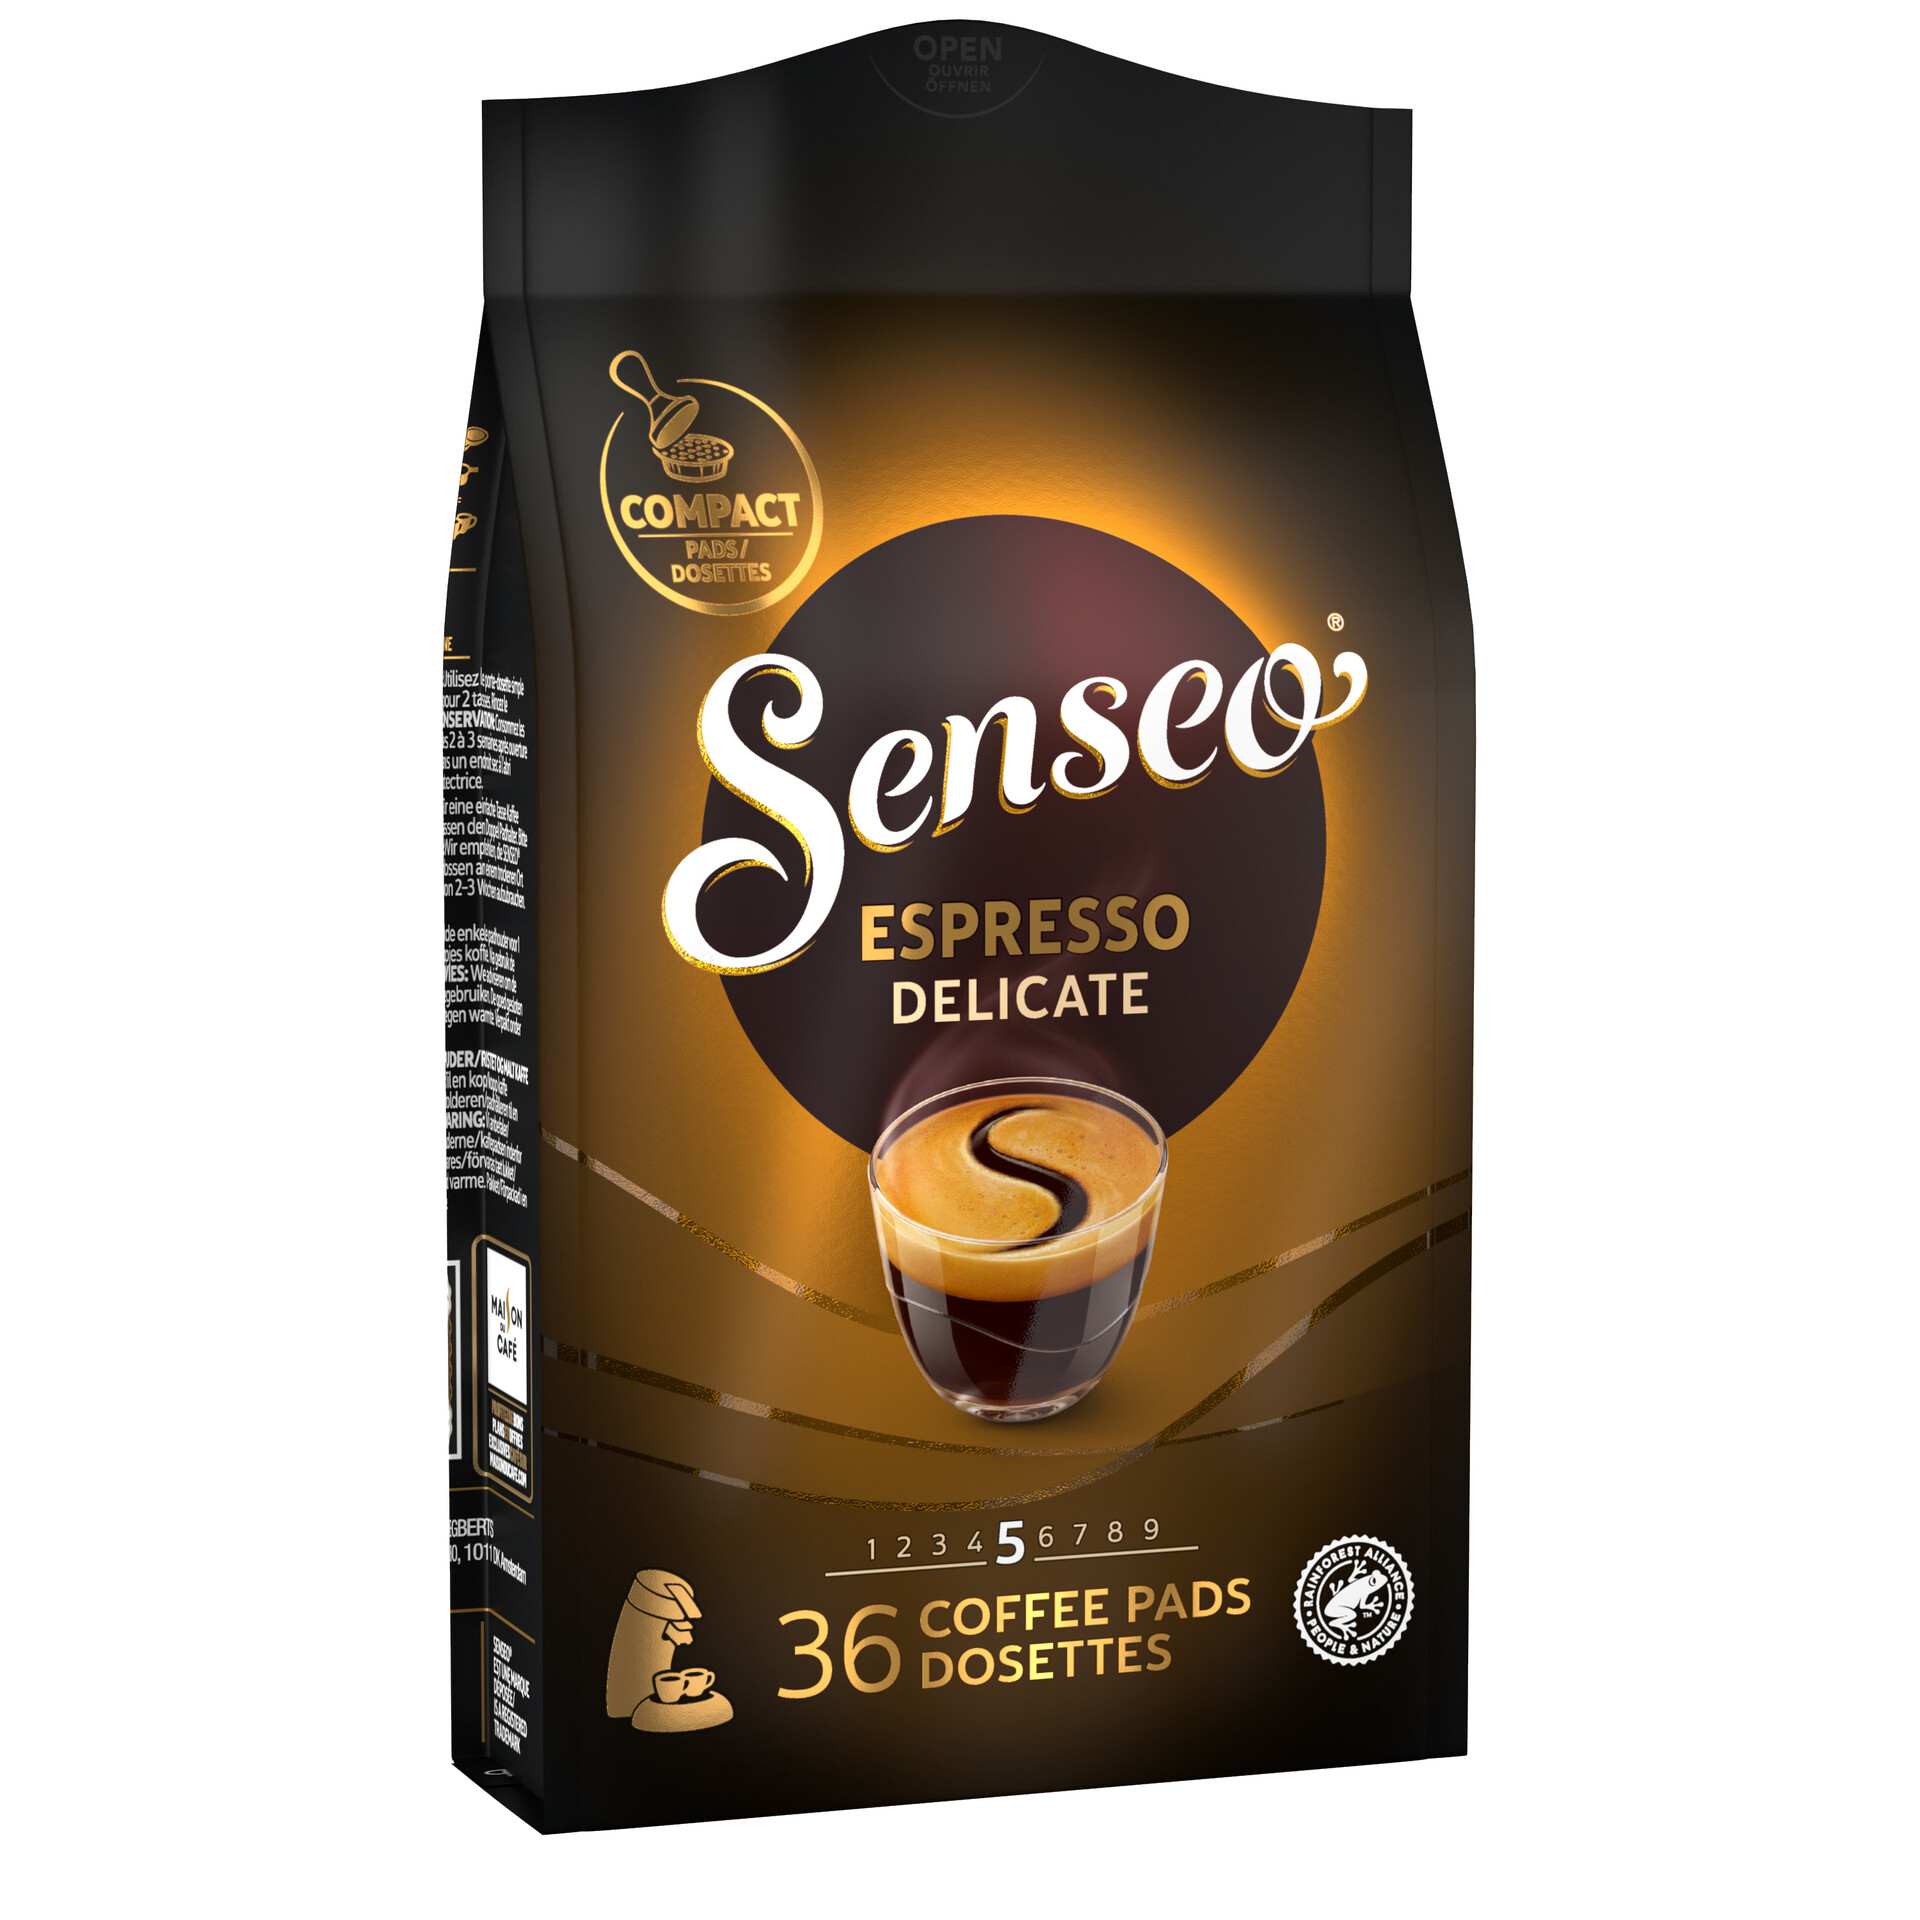 Senseo Cappuccino 8 coffee pods